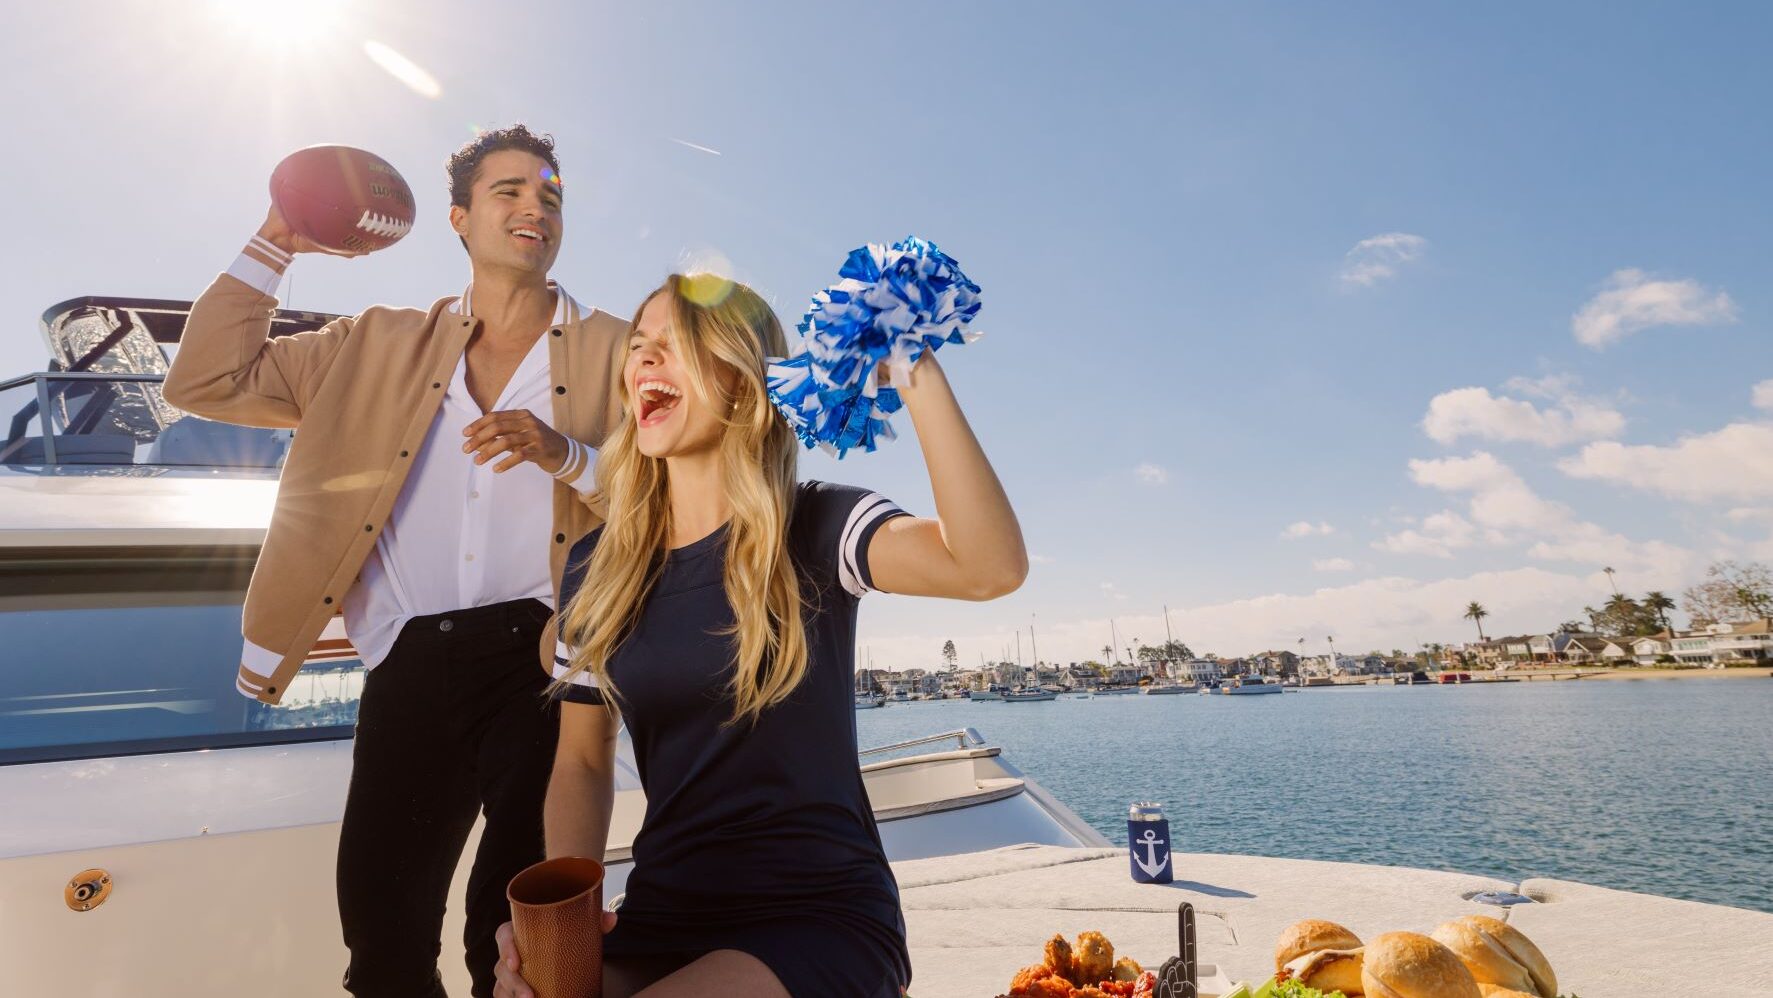 A quarter back and cheerleader celebrating on a Yacht near Balboa Bay Resort.